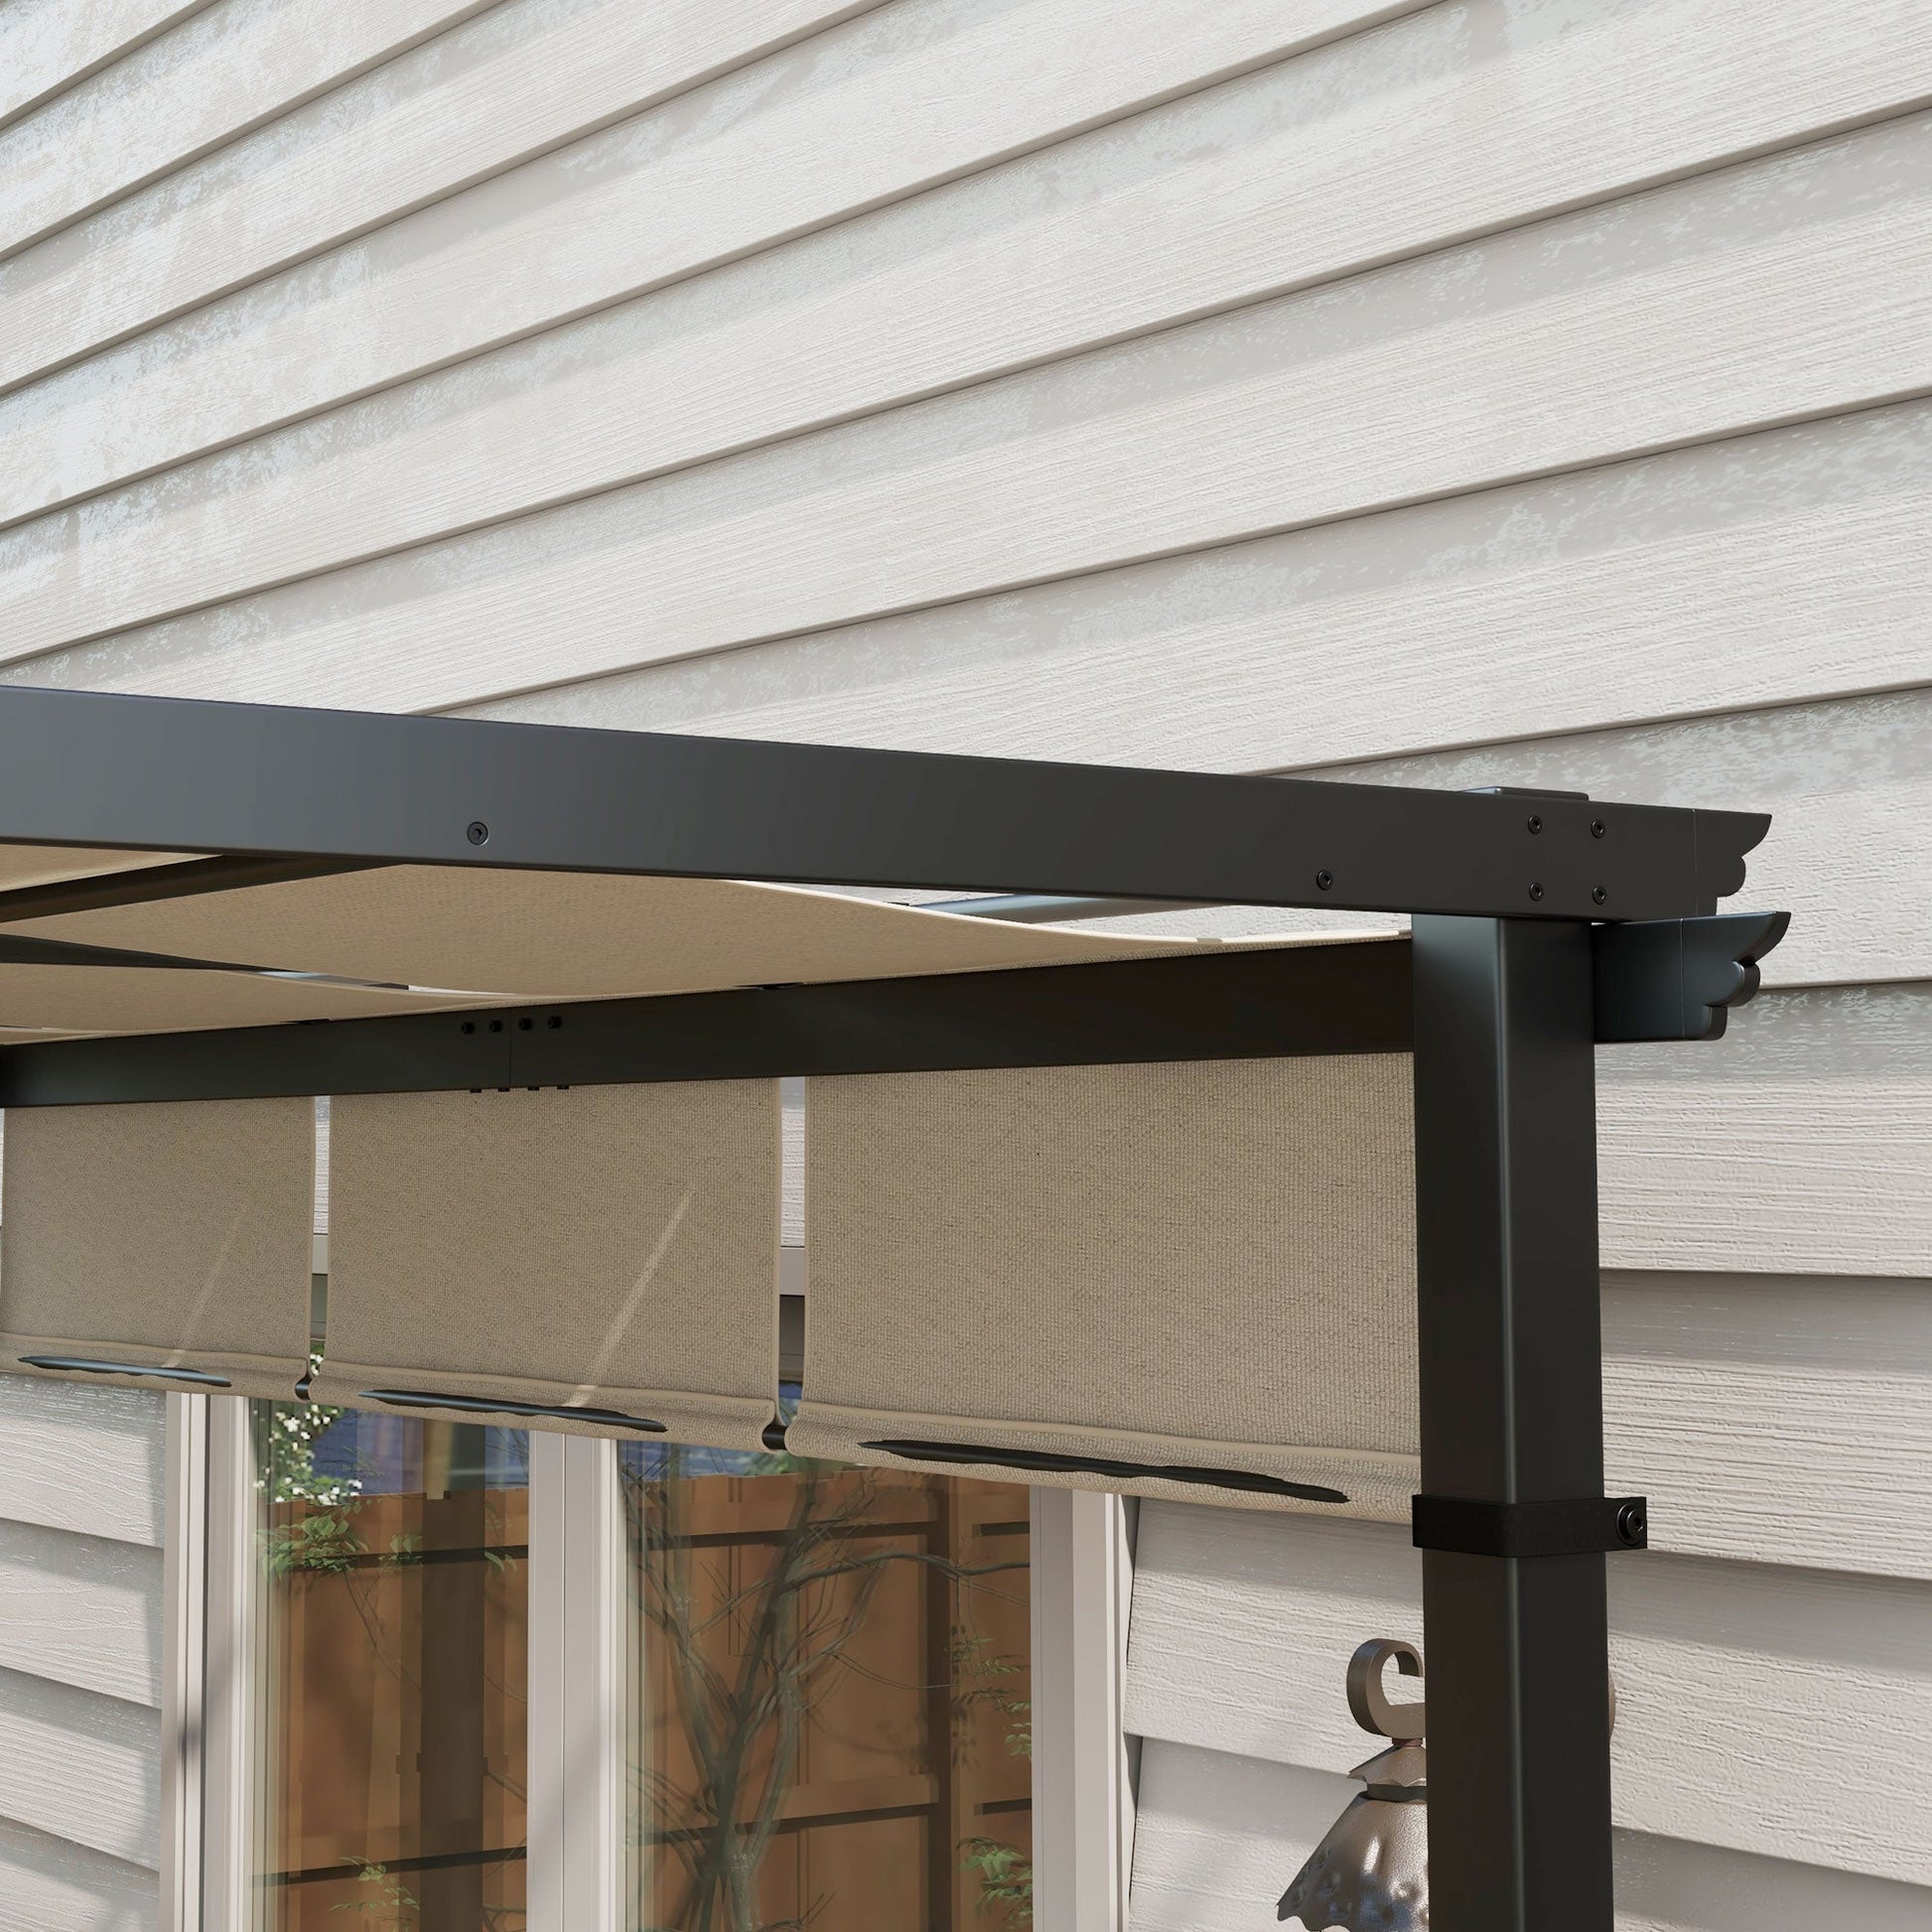 10' x 10' Metal Pergola, Outdoor Pergola with Retractable Canopy, for Garden, Patio, Backyard, Deck - Gallery Canada